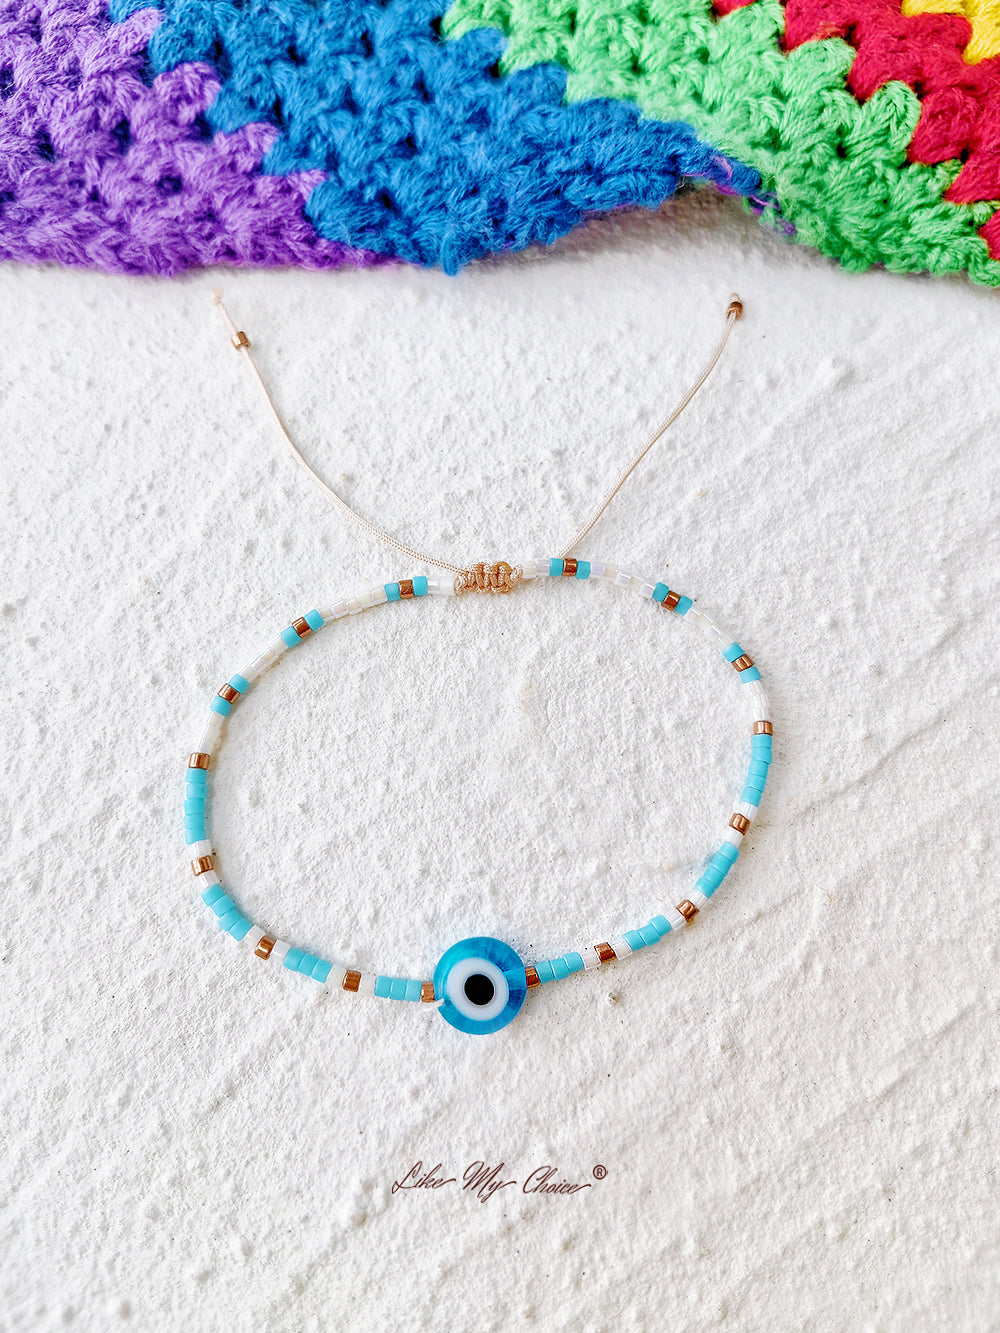 Verstellbares Perlenarmband mit Kordelzug, blaues Auge